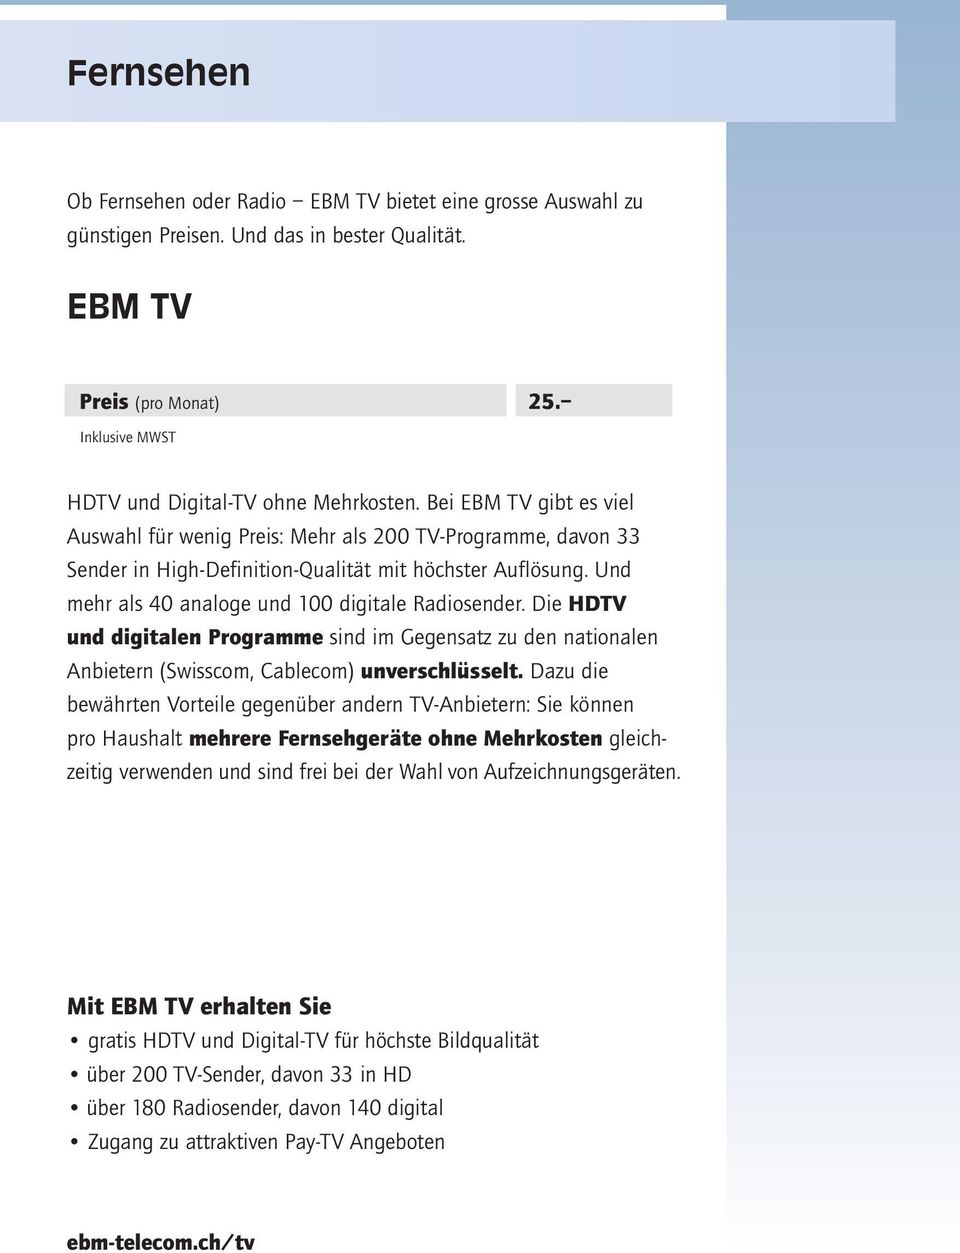 Die HDTV und digitalen Programme sind im Gegensatz zu den nationalen Anbietern (Swisscom, Cablecom) unverschlüsselt.